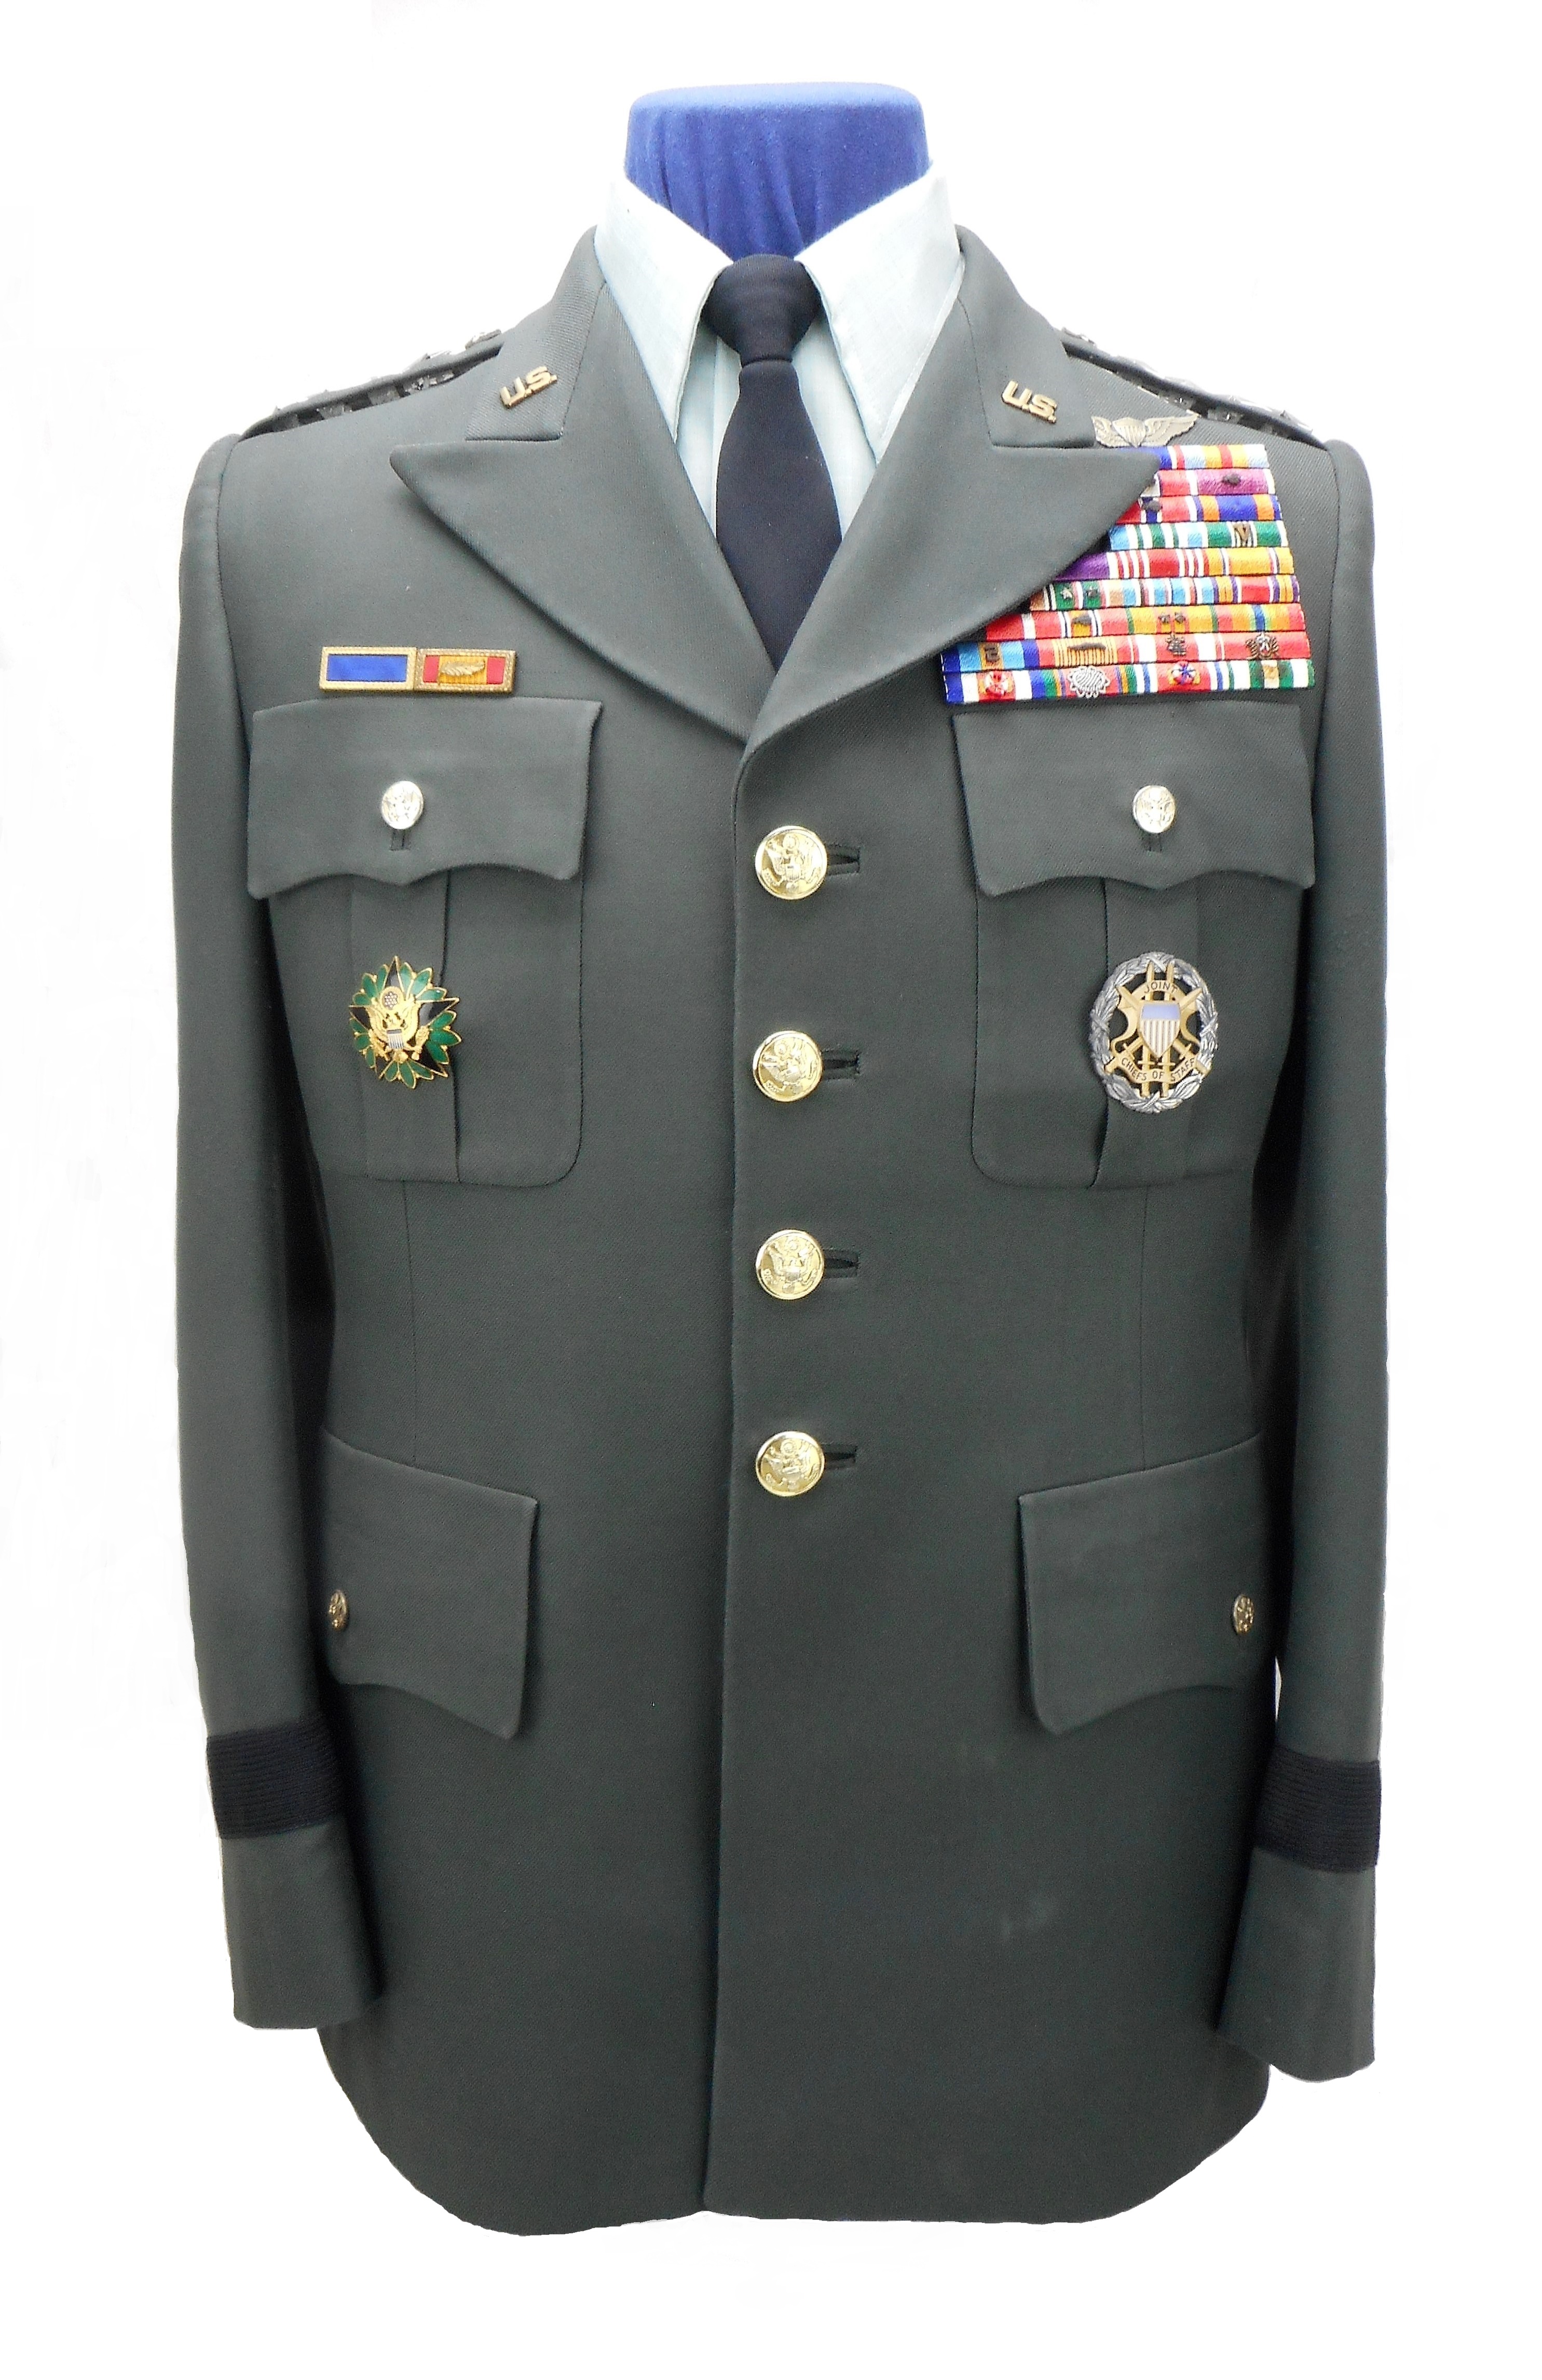 John Vessey's uniform